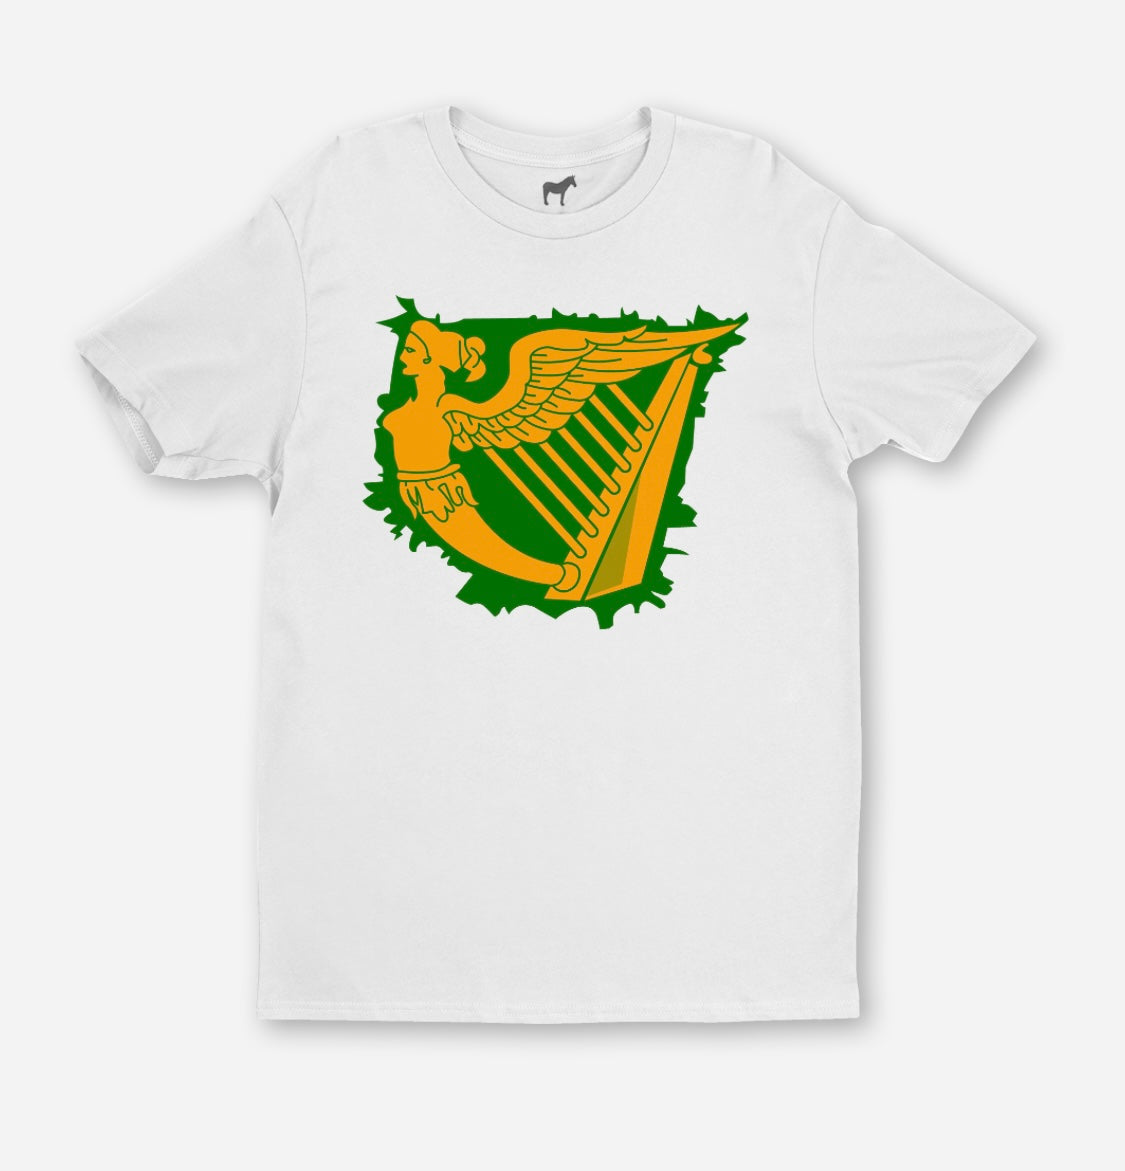 "Emerald Guards" - 8th Alabama Company I T-Shirt